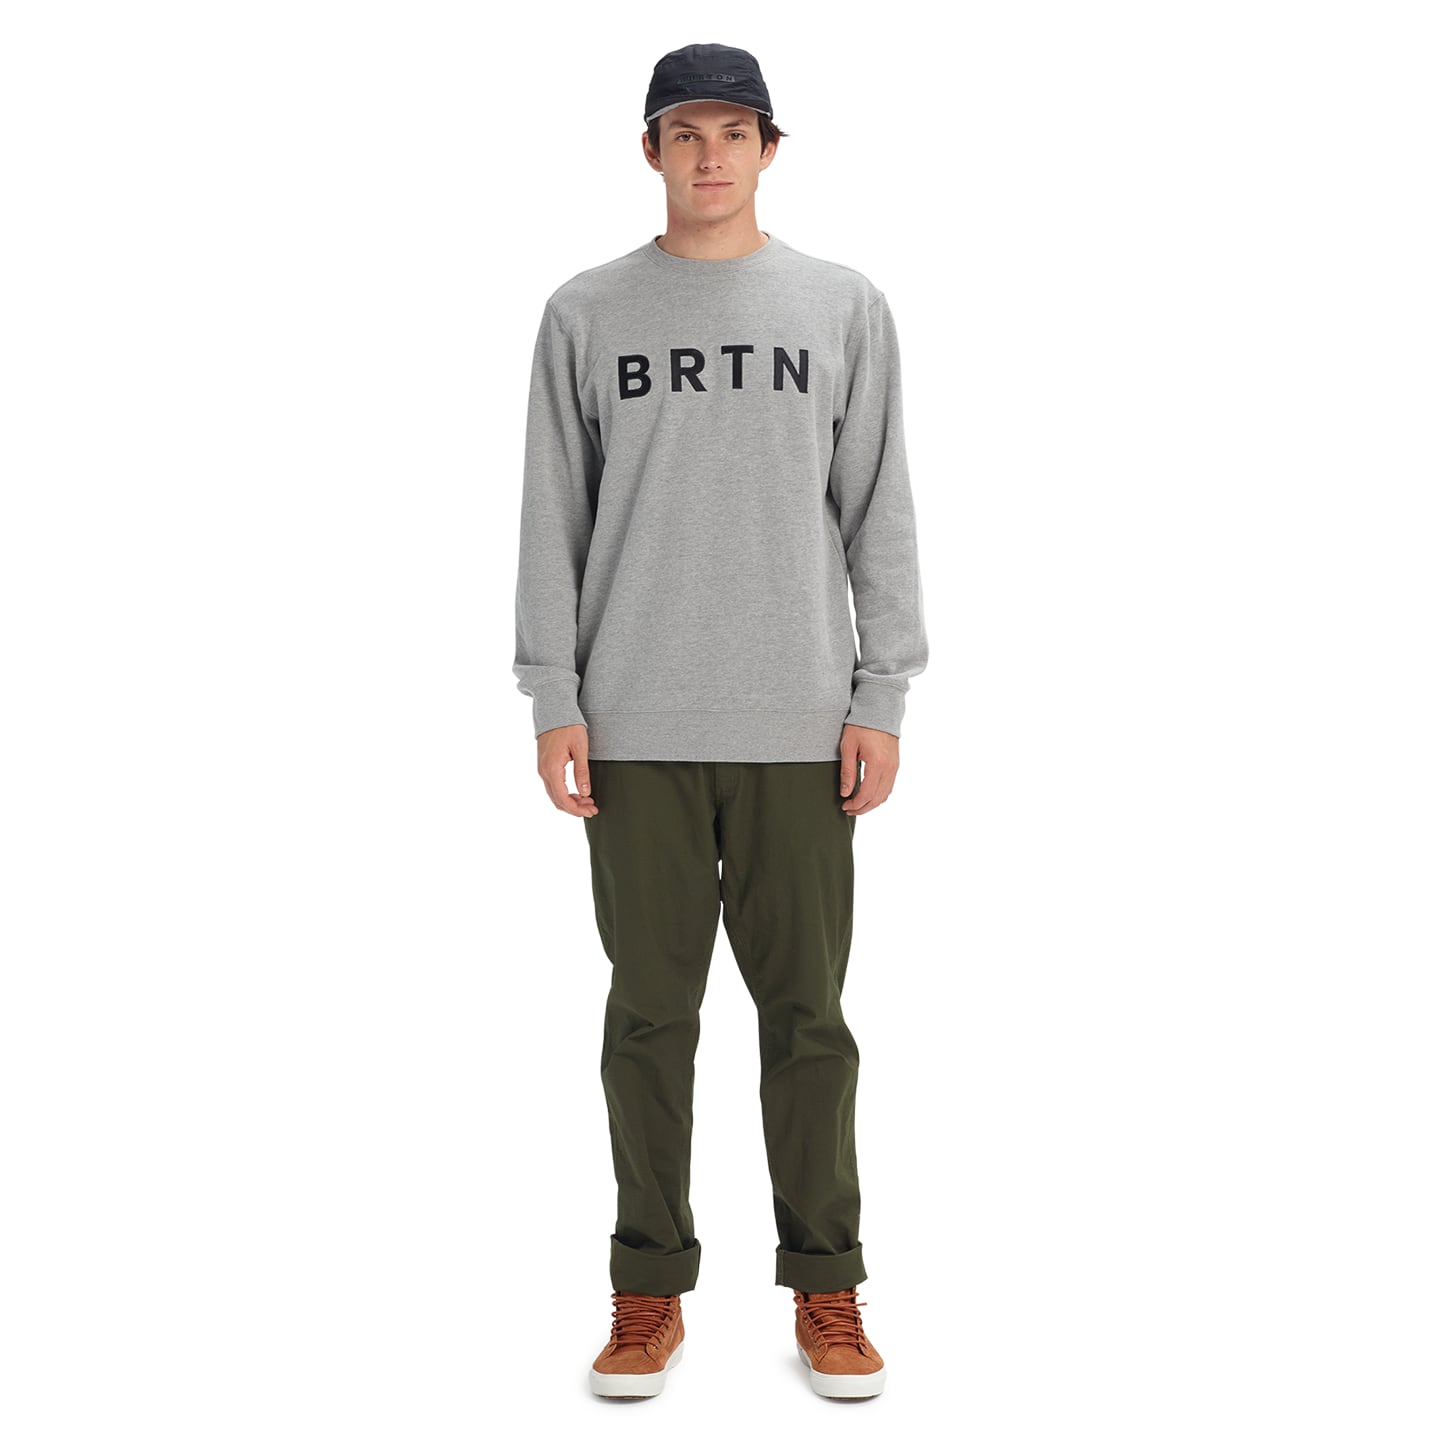 Martini Olive Burton Herren Brtn Sweatshirt XL 